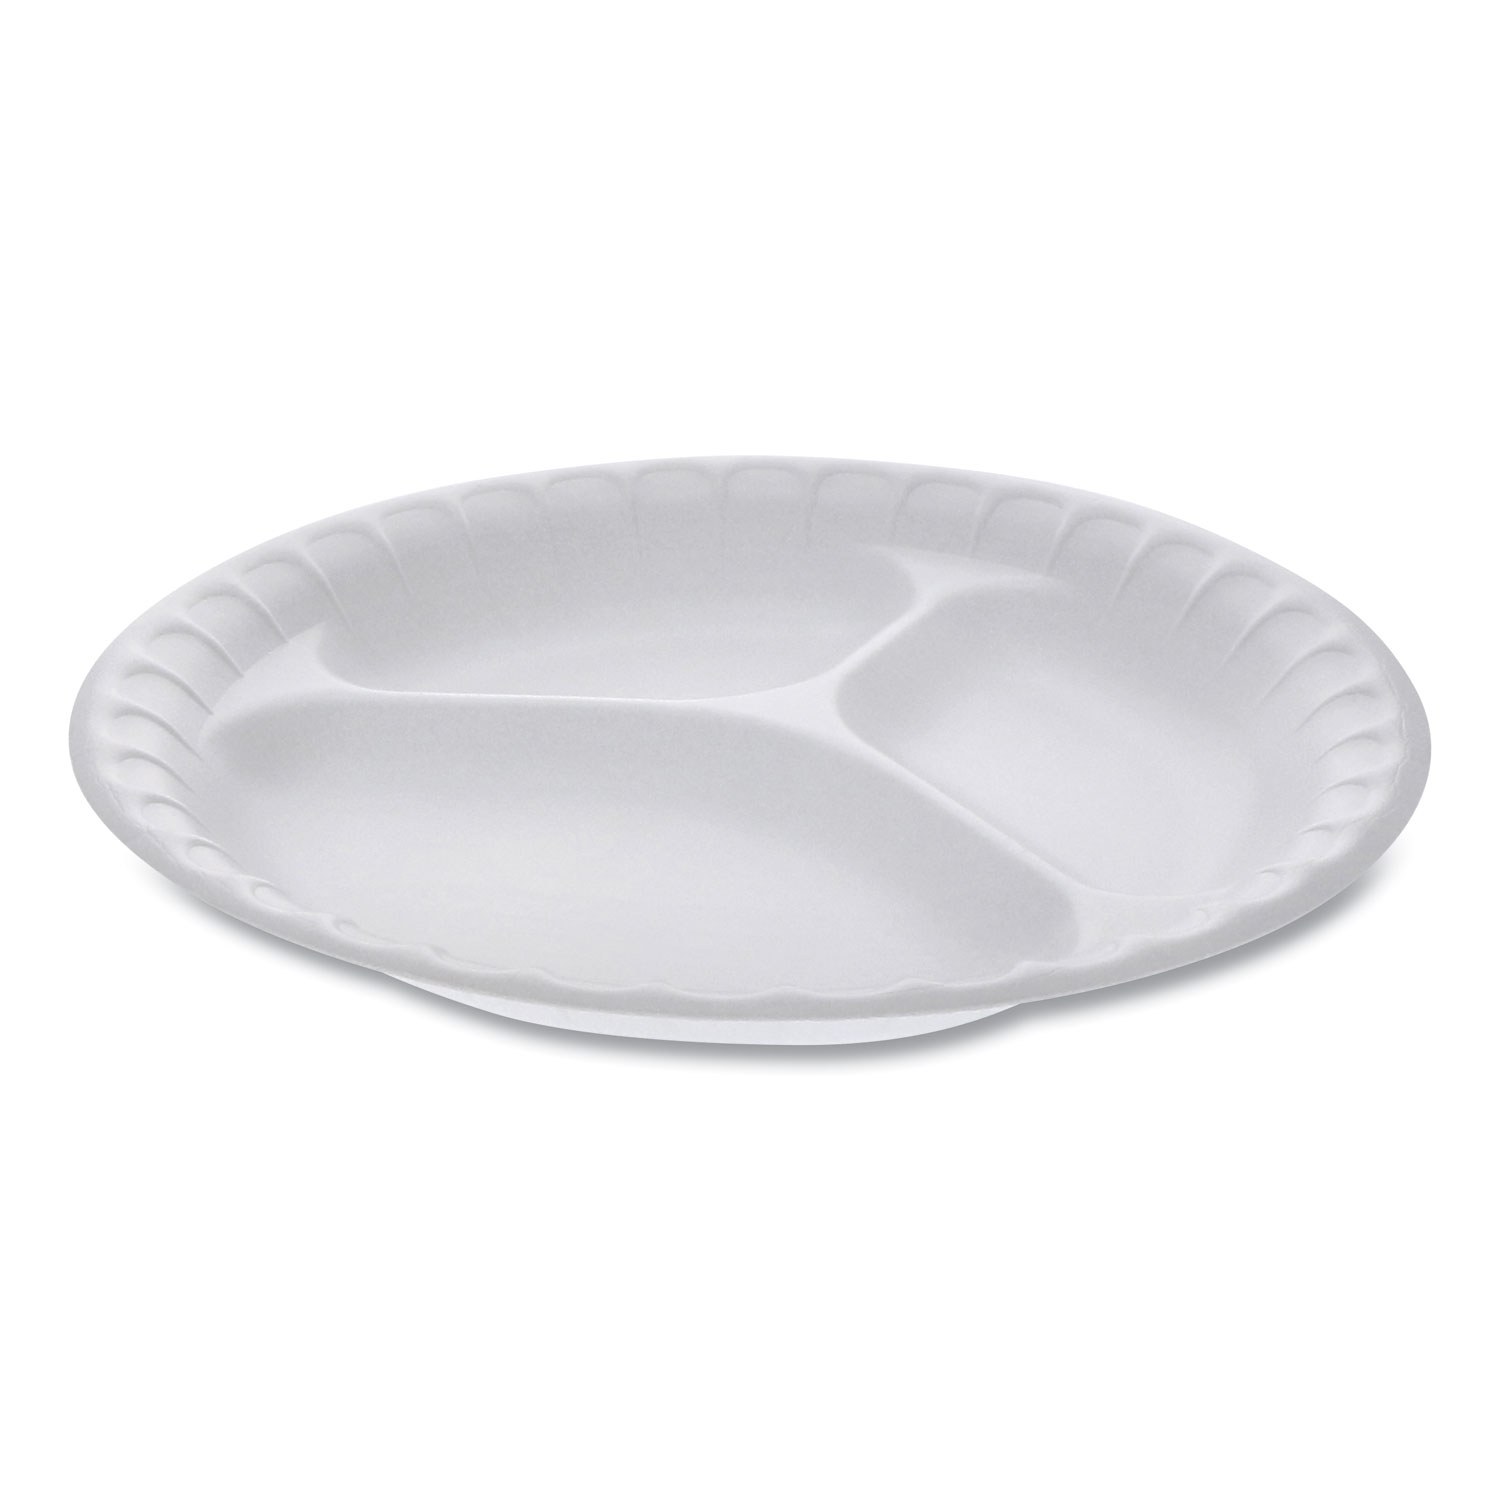 Pactiv Unlaminated Foam Dinnerware, 3-Compartment Plate, 9 Diameter, White, 500/Carton